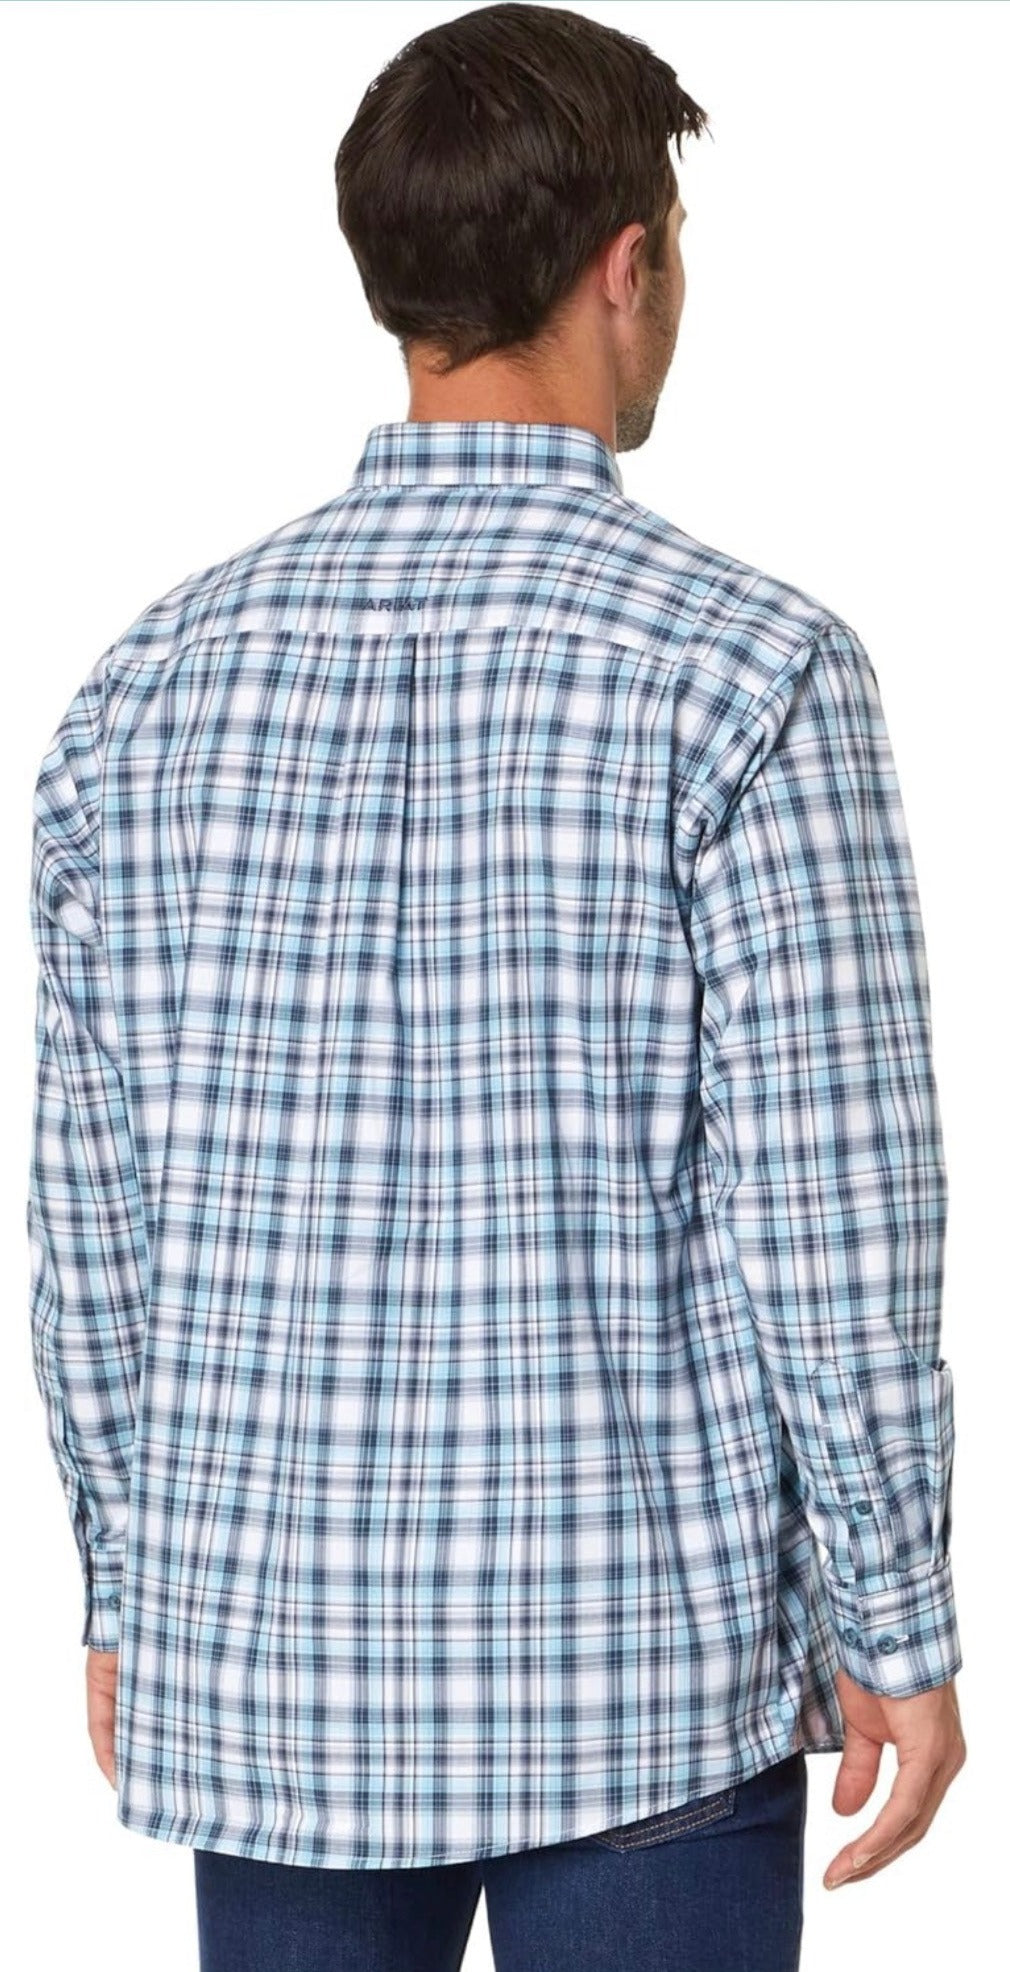 Camisa ariat para hombre manga larga azul con cuadros